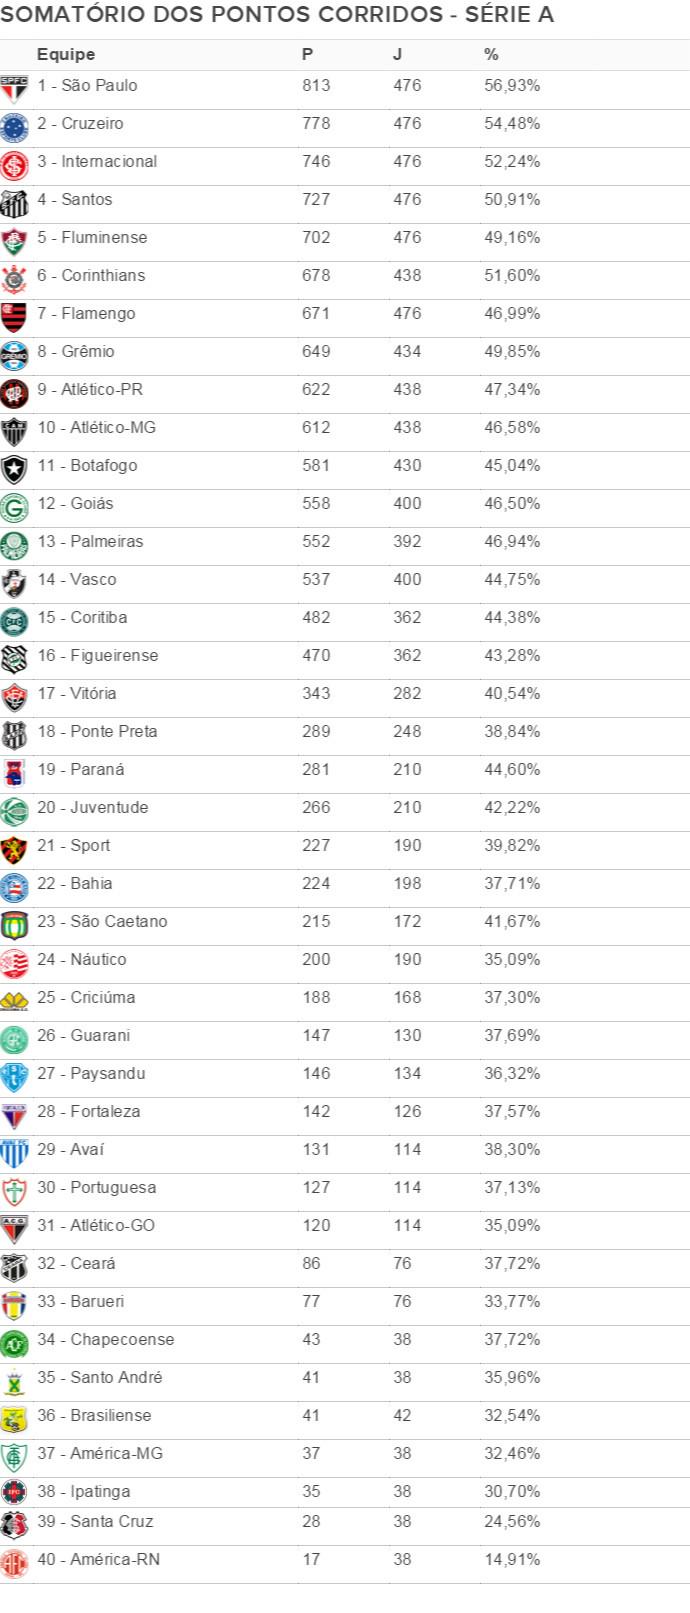 Ranking dos Pontos Corridos 2003-2014